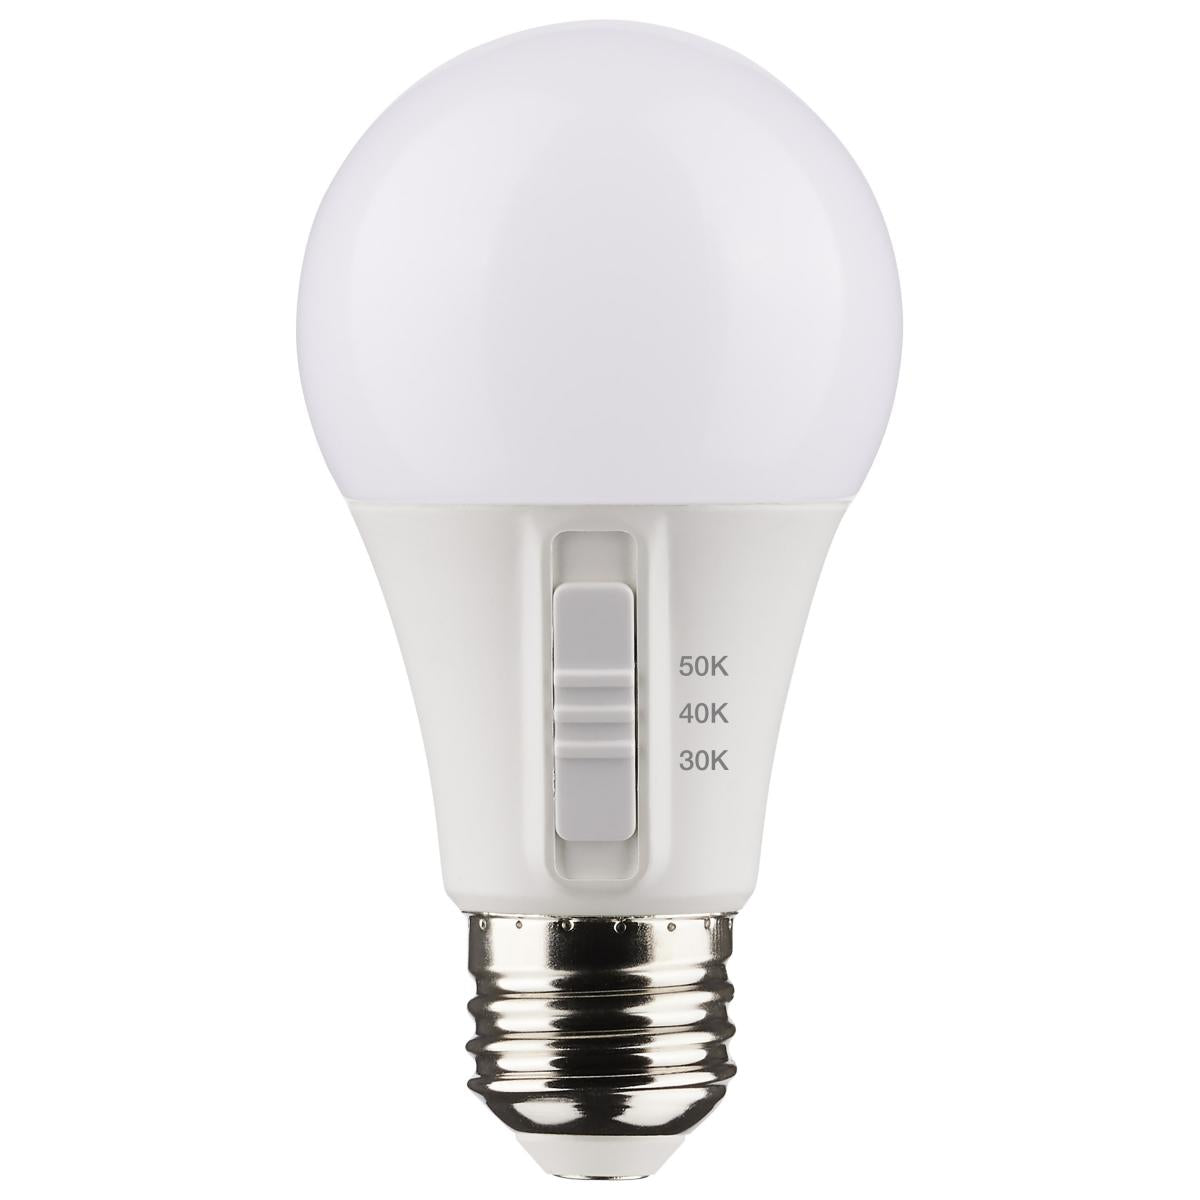 A19 LED Bulb, 60W Equivalent, 9 Watt, 800 Lumens, Selectable CCT 30K/40K/50K, E26 Medium Base, Frosted Finish